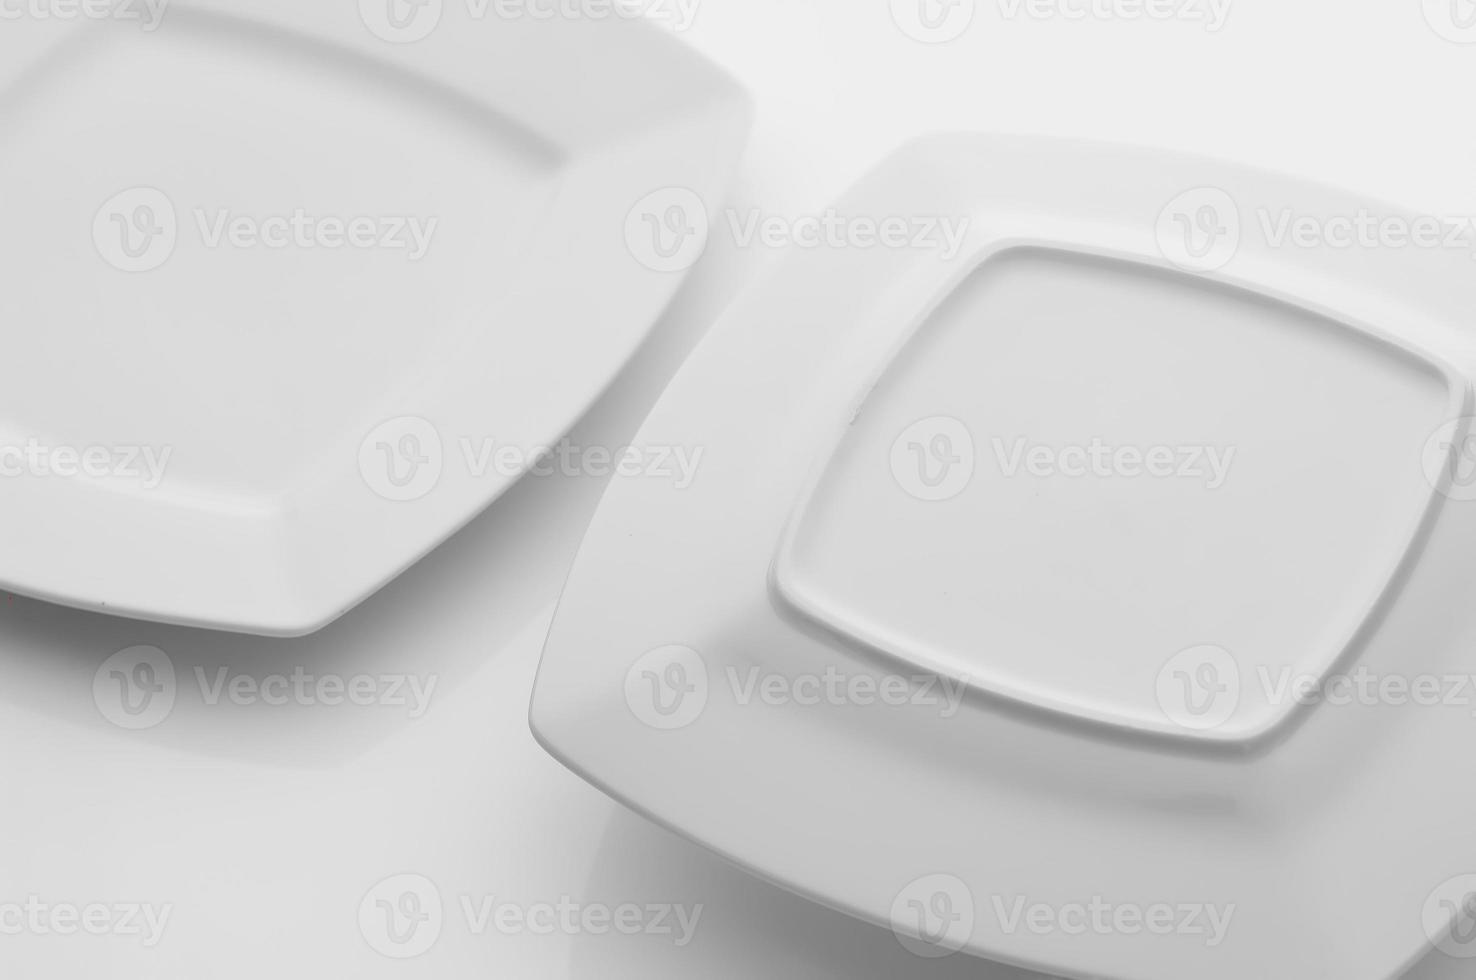 kitchen and restaurant utensils, plates, on a light background photo